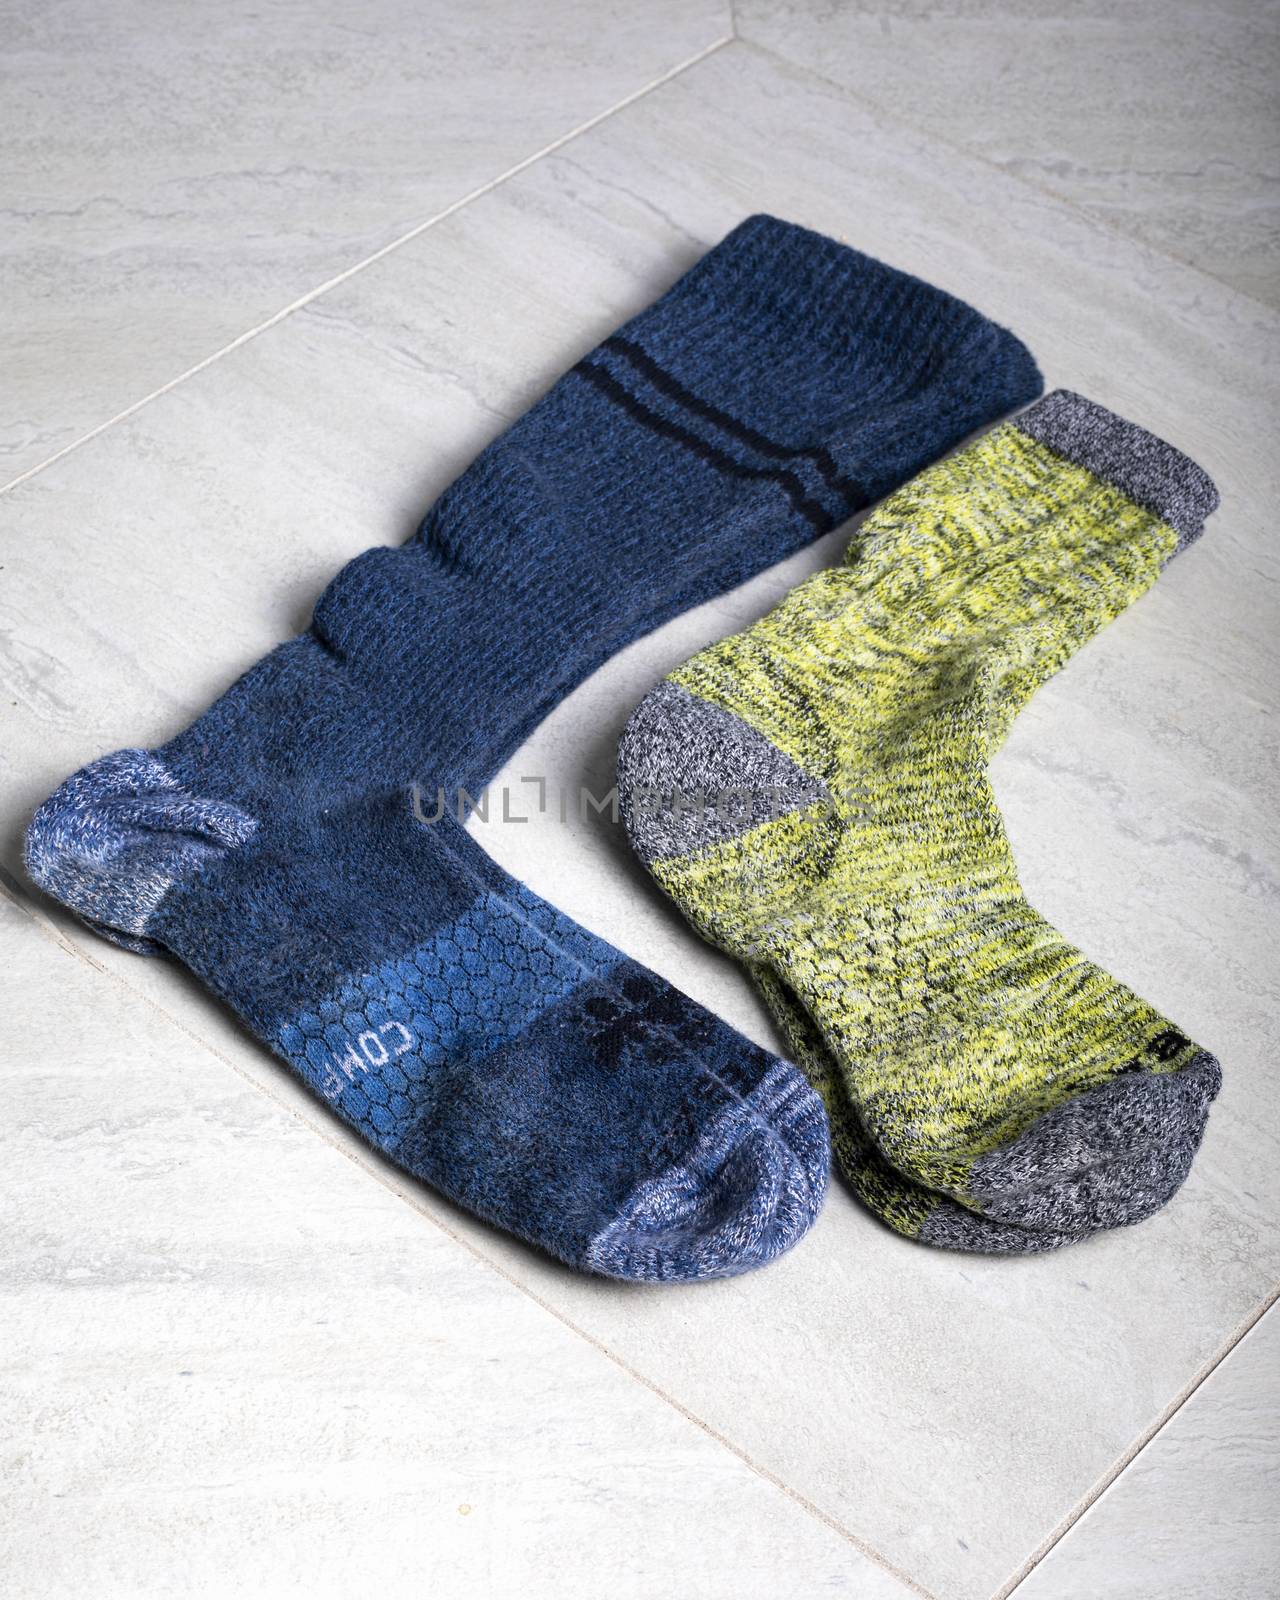 Bombas calf sock versus compression socks by CharlieFloyd